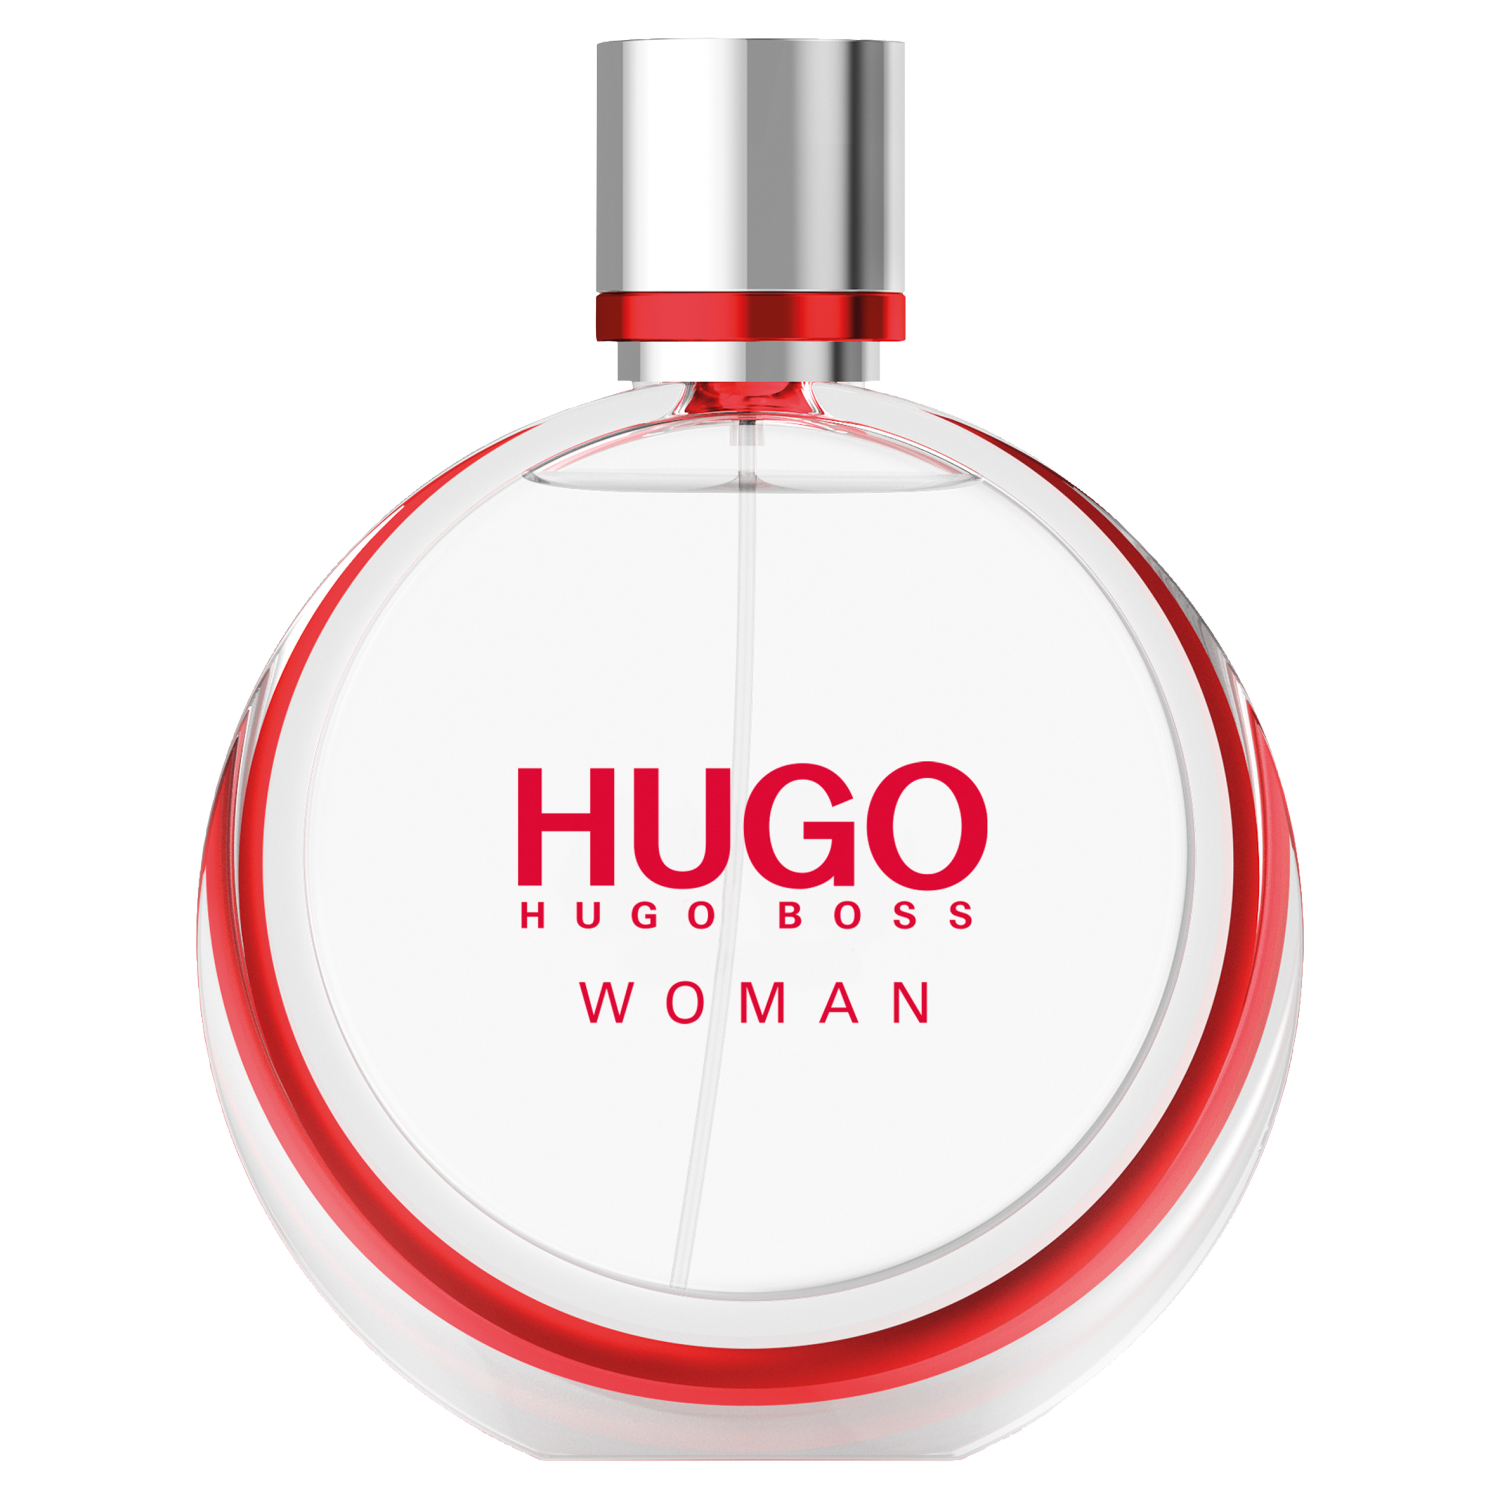 Hugo woman парфюмерная